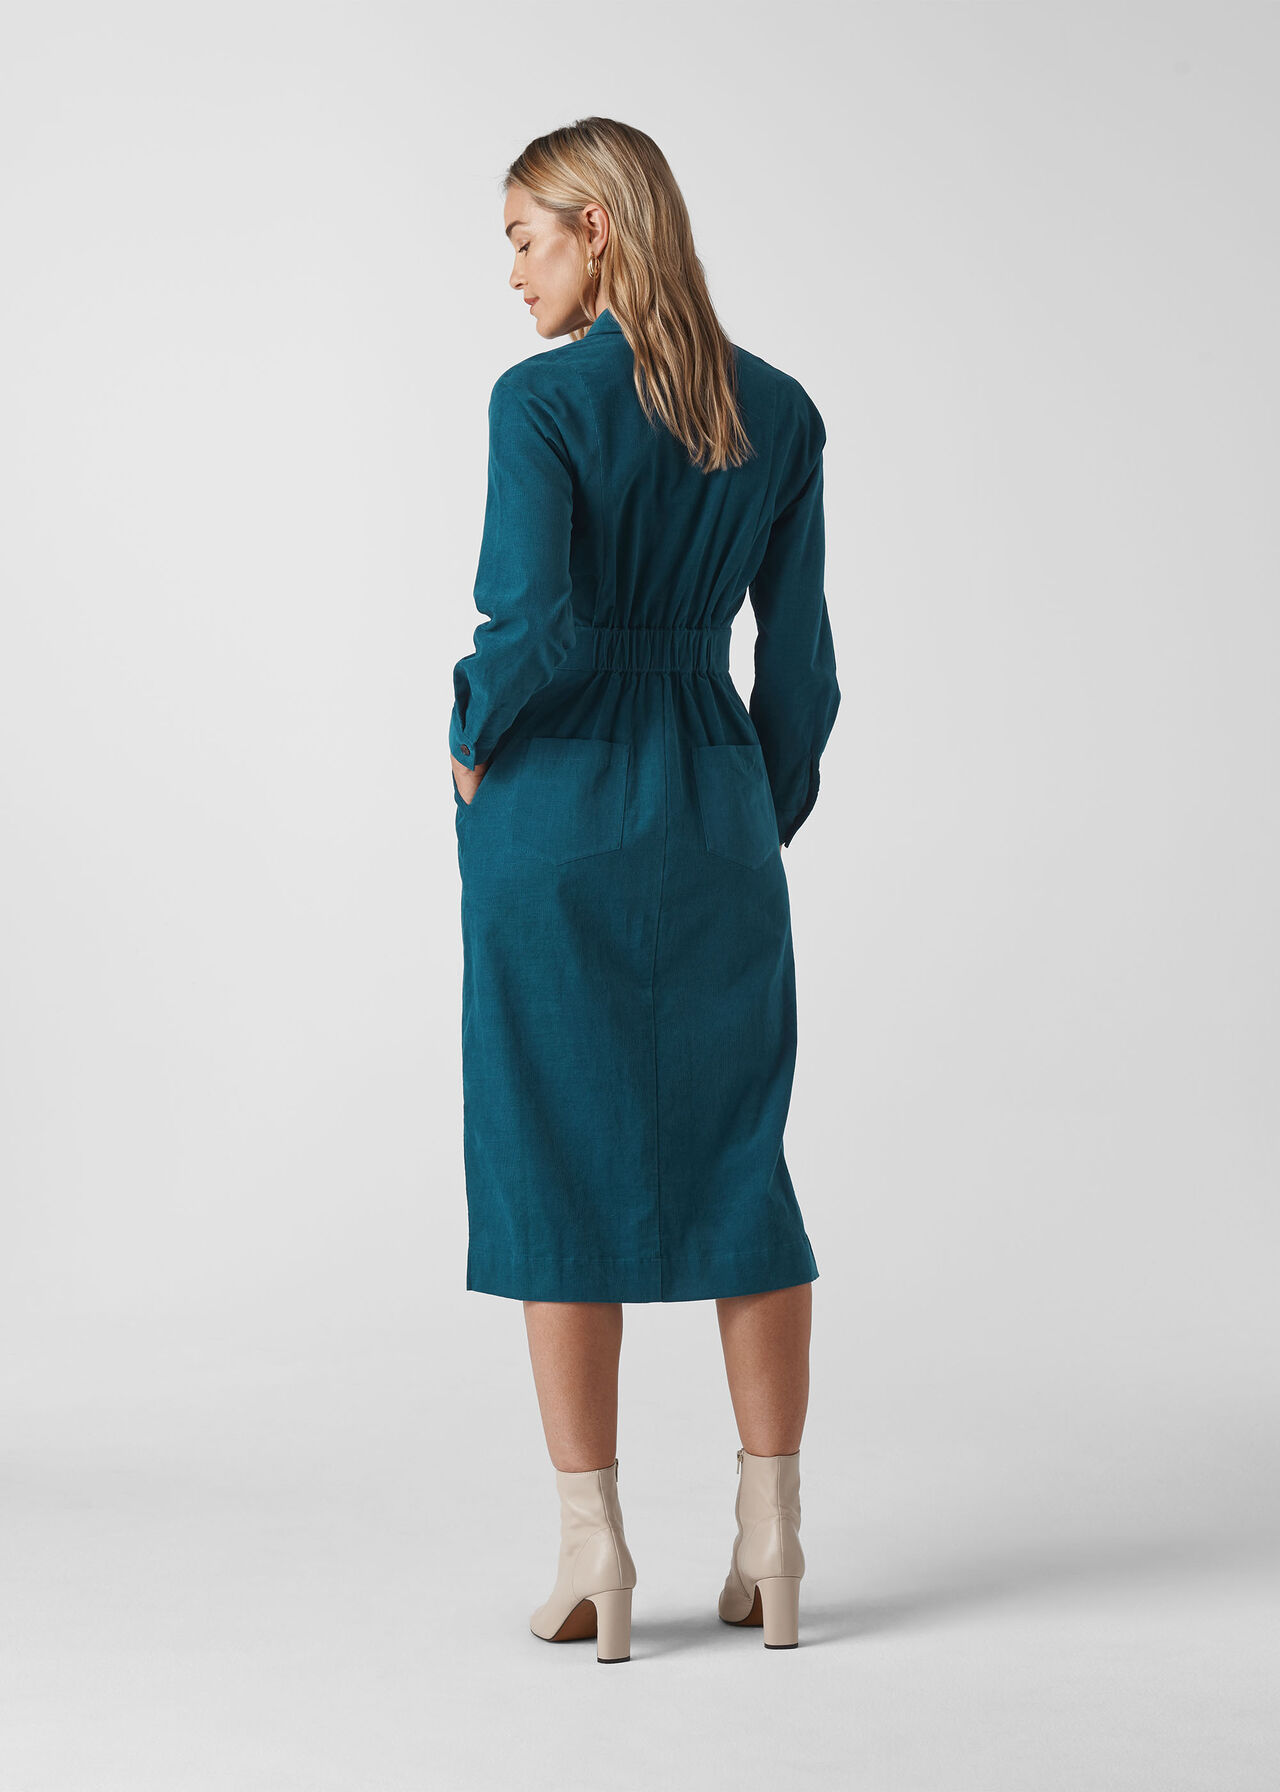 Romaine Cord Dress Teal